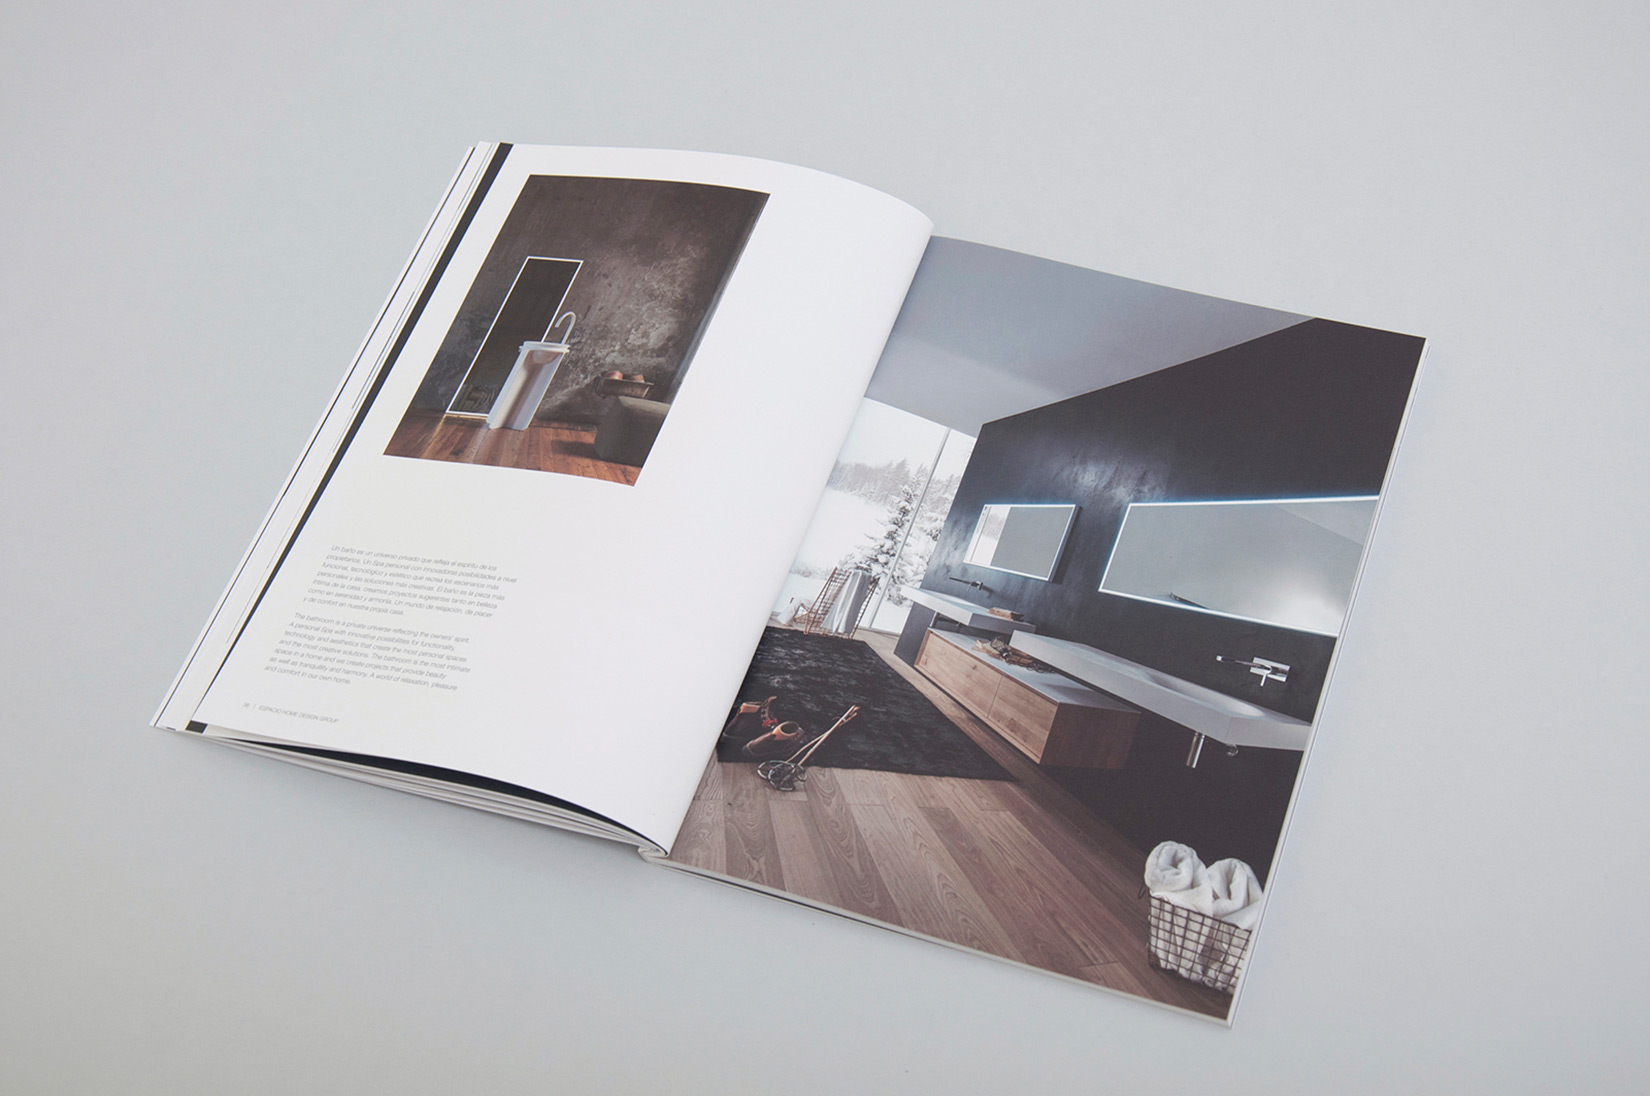 Espacio Home Design Group. Catálogo y Web.